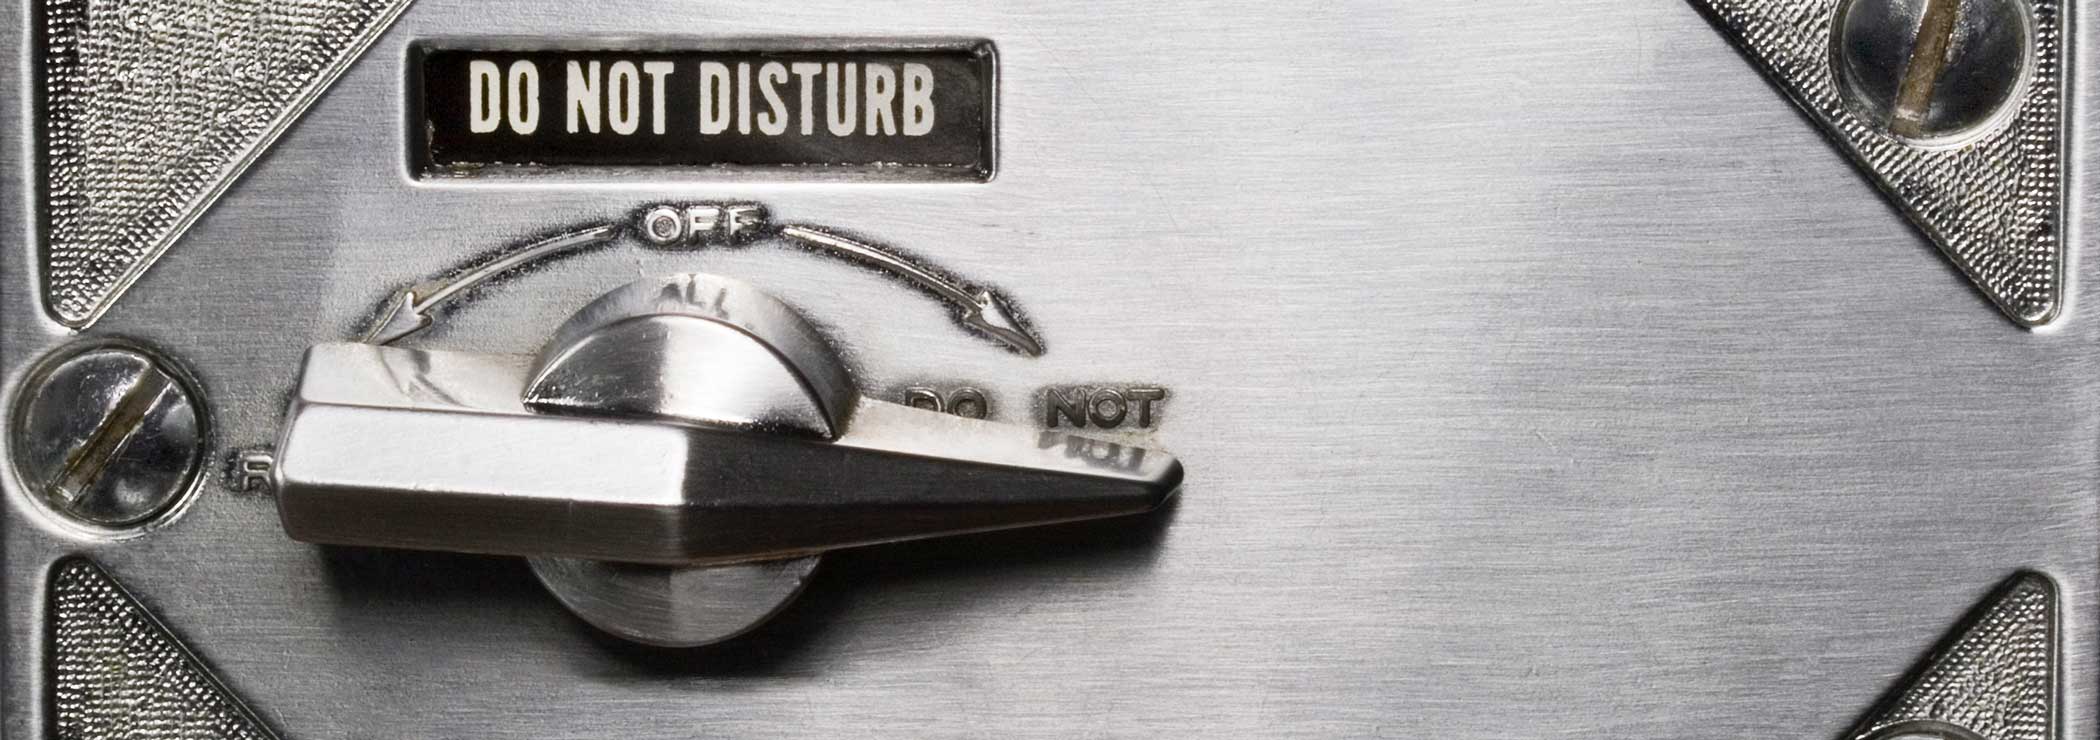 Do not disturb lock